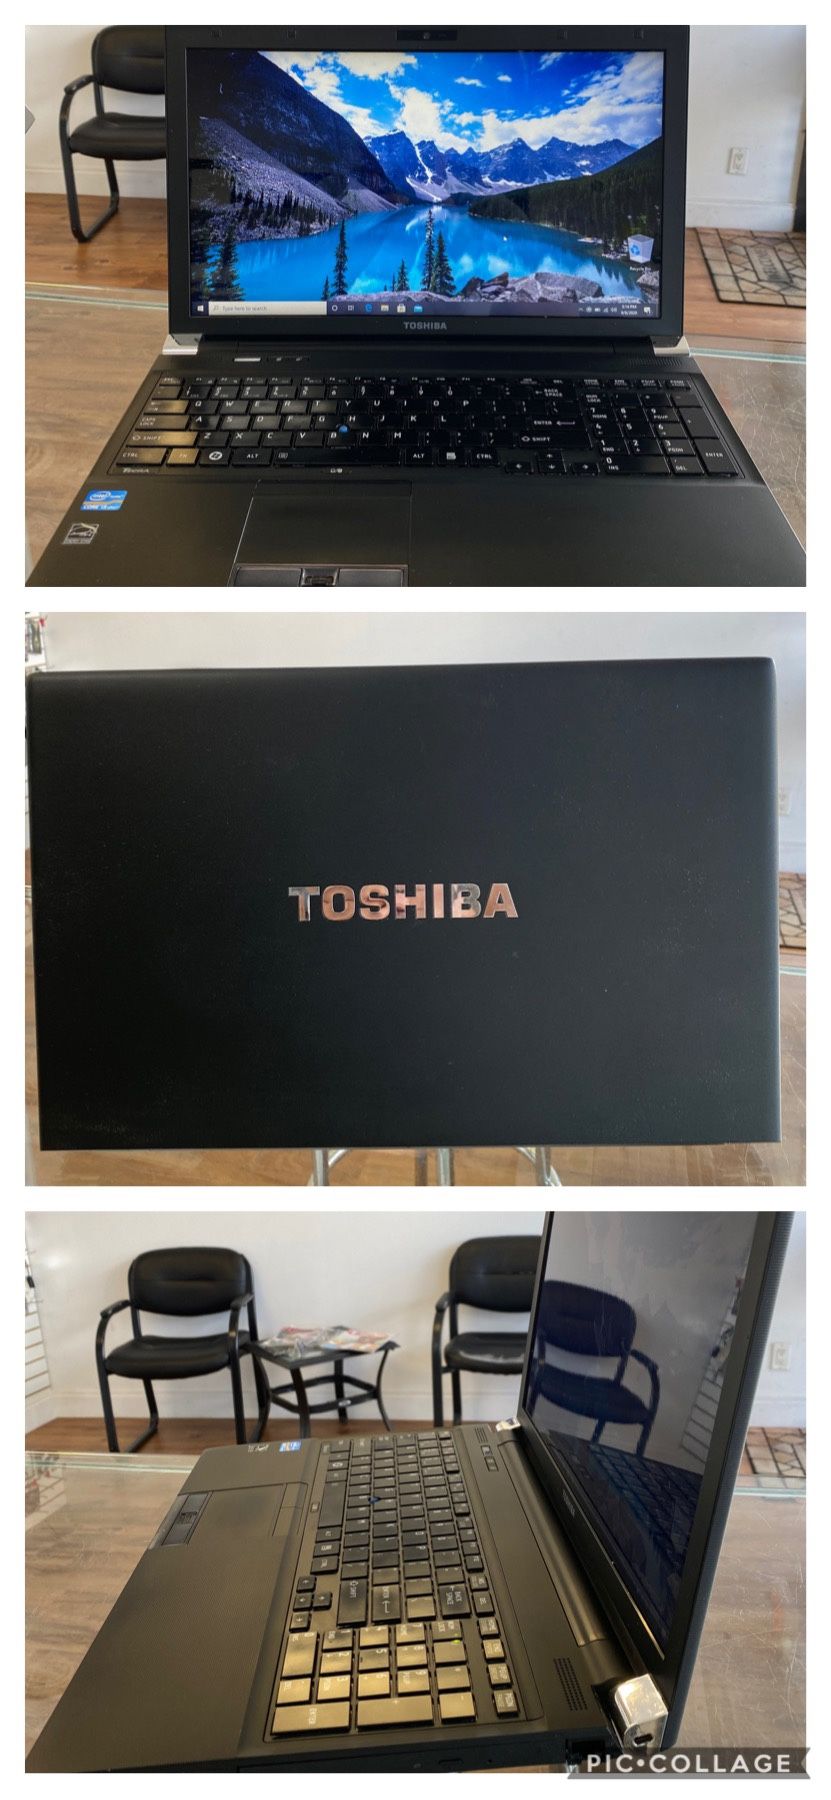 Toshiba Tecra 15.6” laptop. i5, 8gb RAM, 750gb HDD